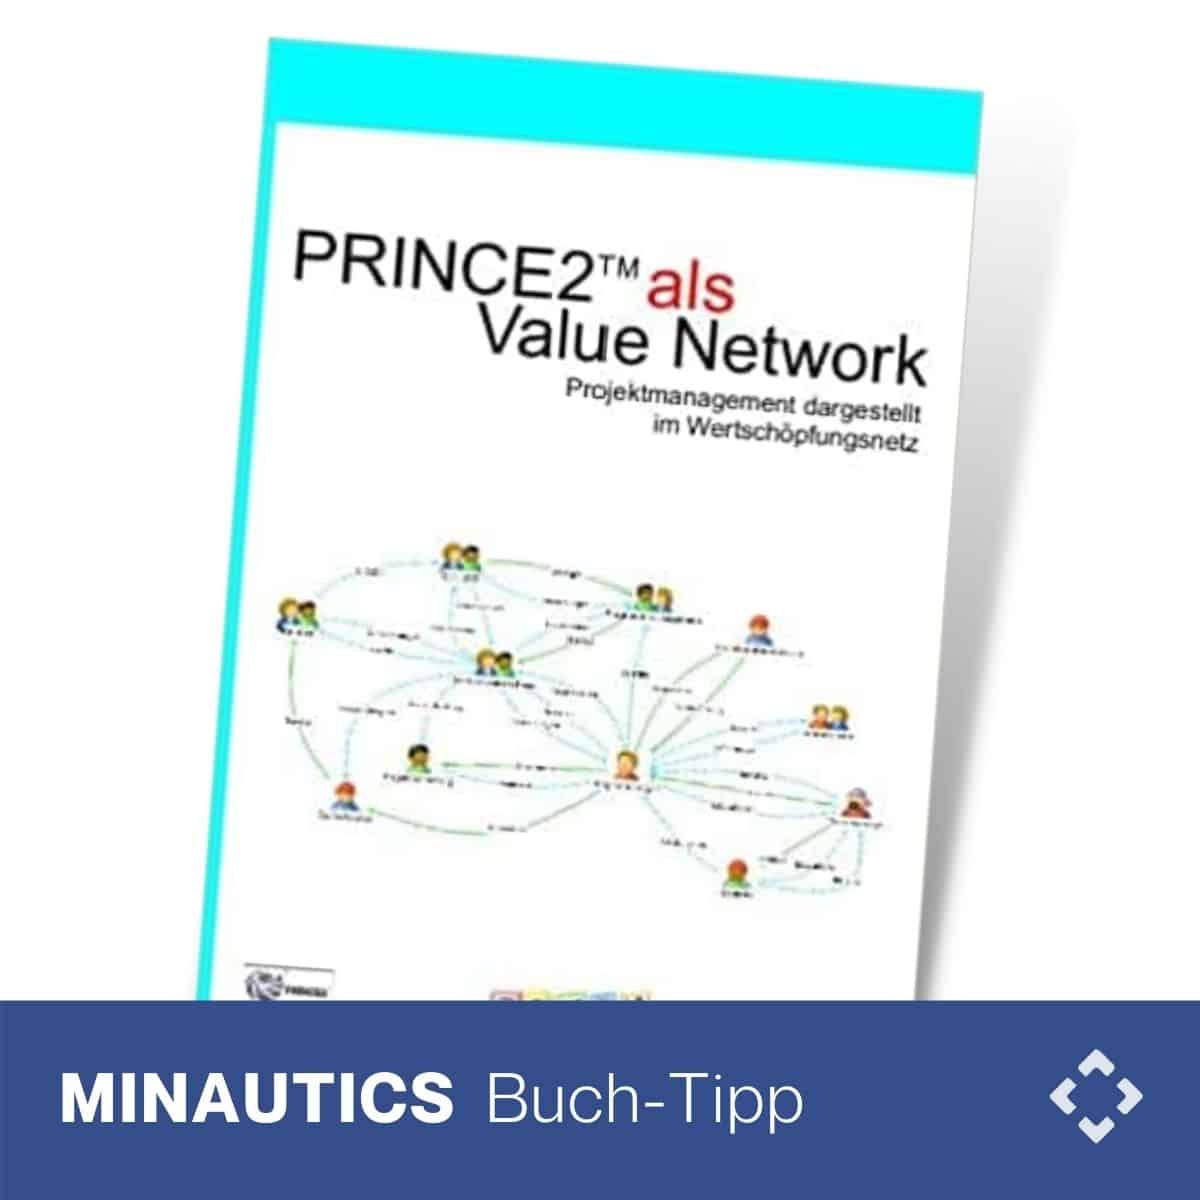 PRINCE2 als Value Network 0 (0)